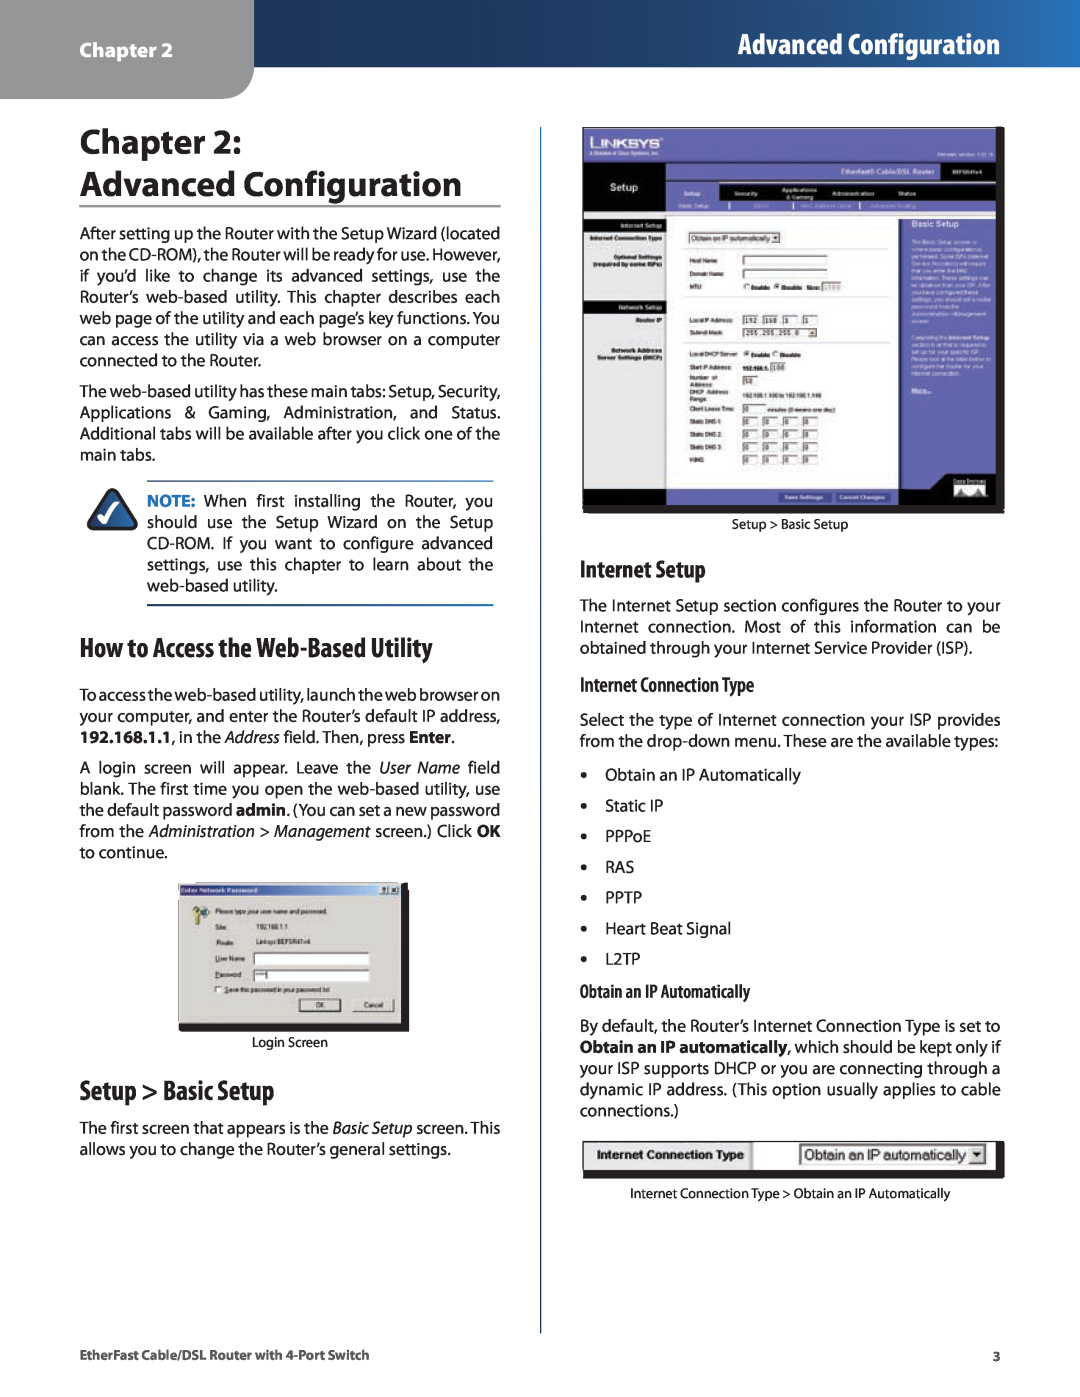 Honeywell HEMS II Chapter Advanced Configuration, How to Access the Web-Based Utility, Setup Basic Setup, Internet Setup 